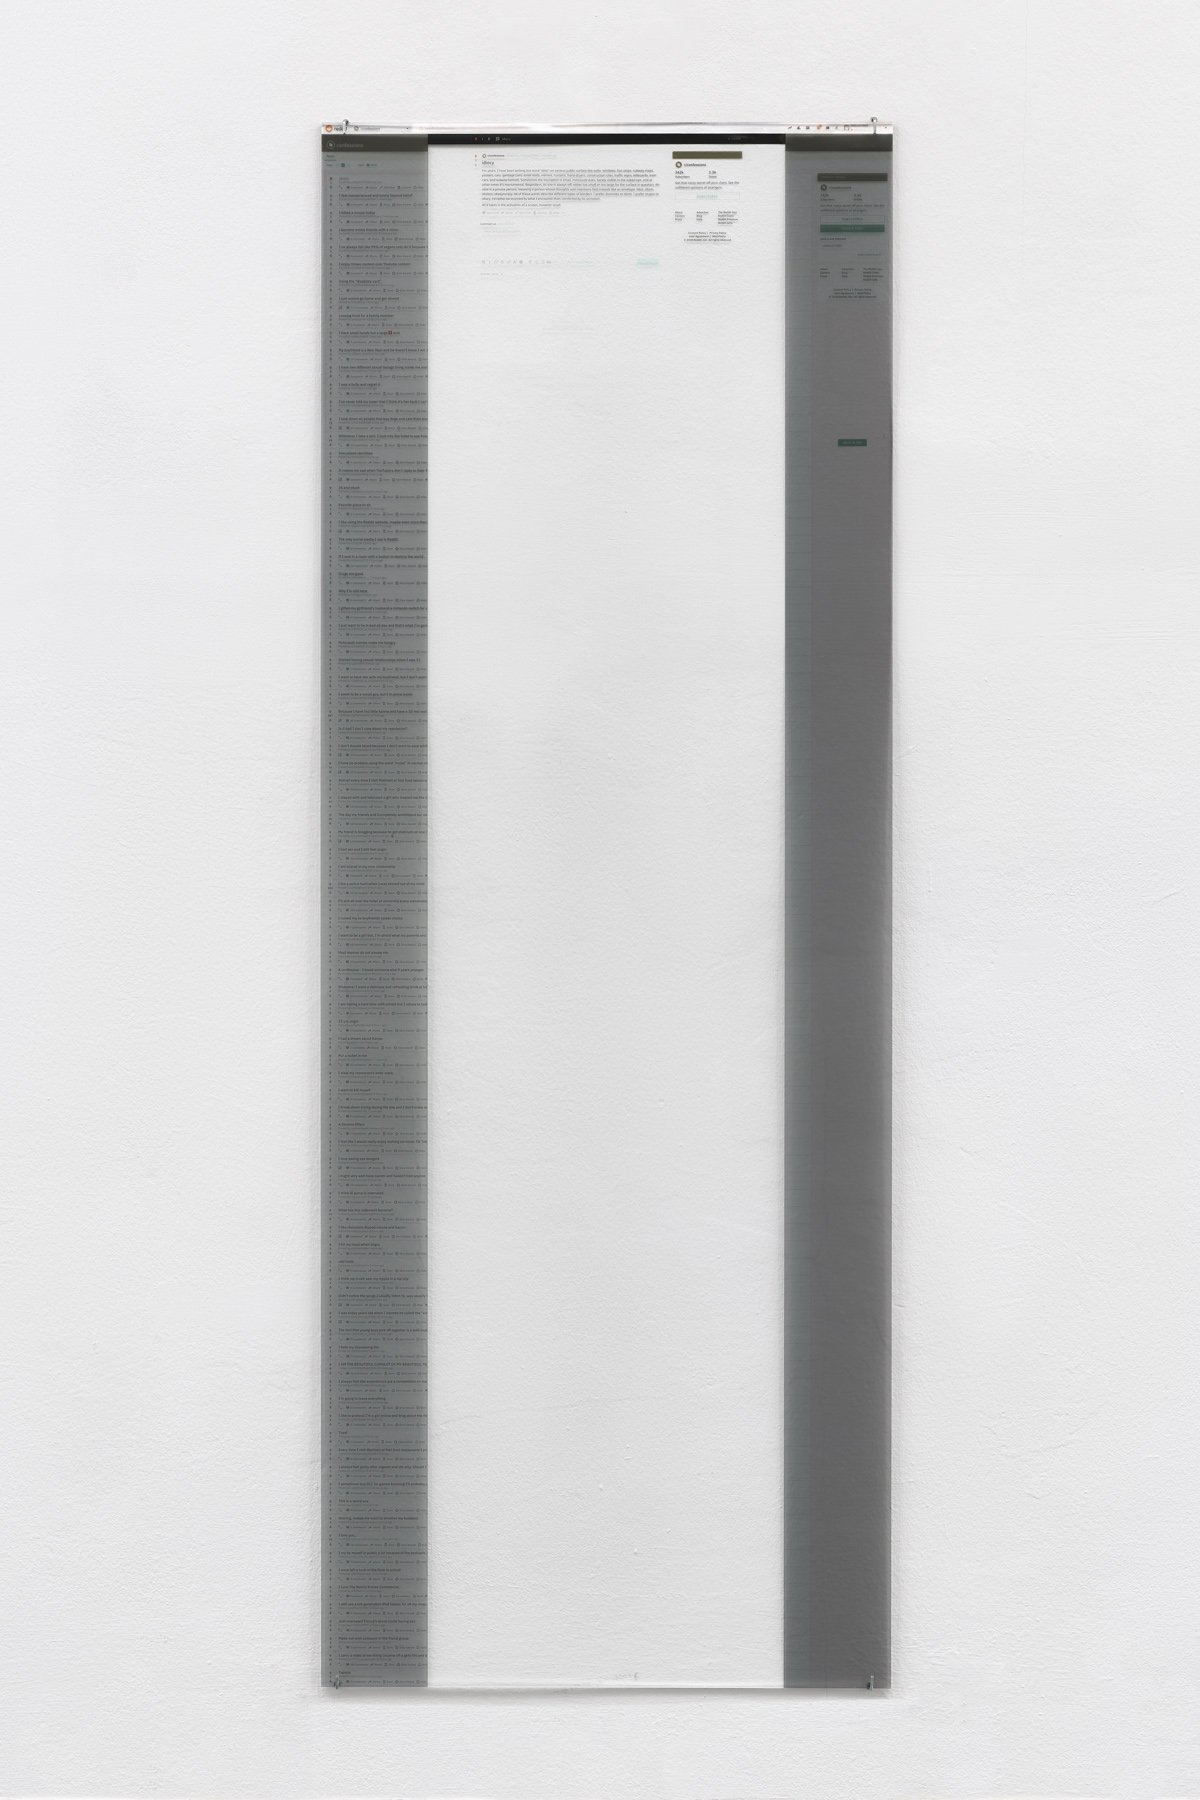 Julien BismuthIdiot confession, 2019Inkjet print on plexiglass160 x 58.4 cm